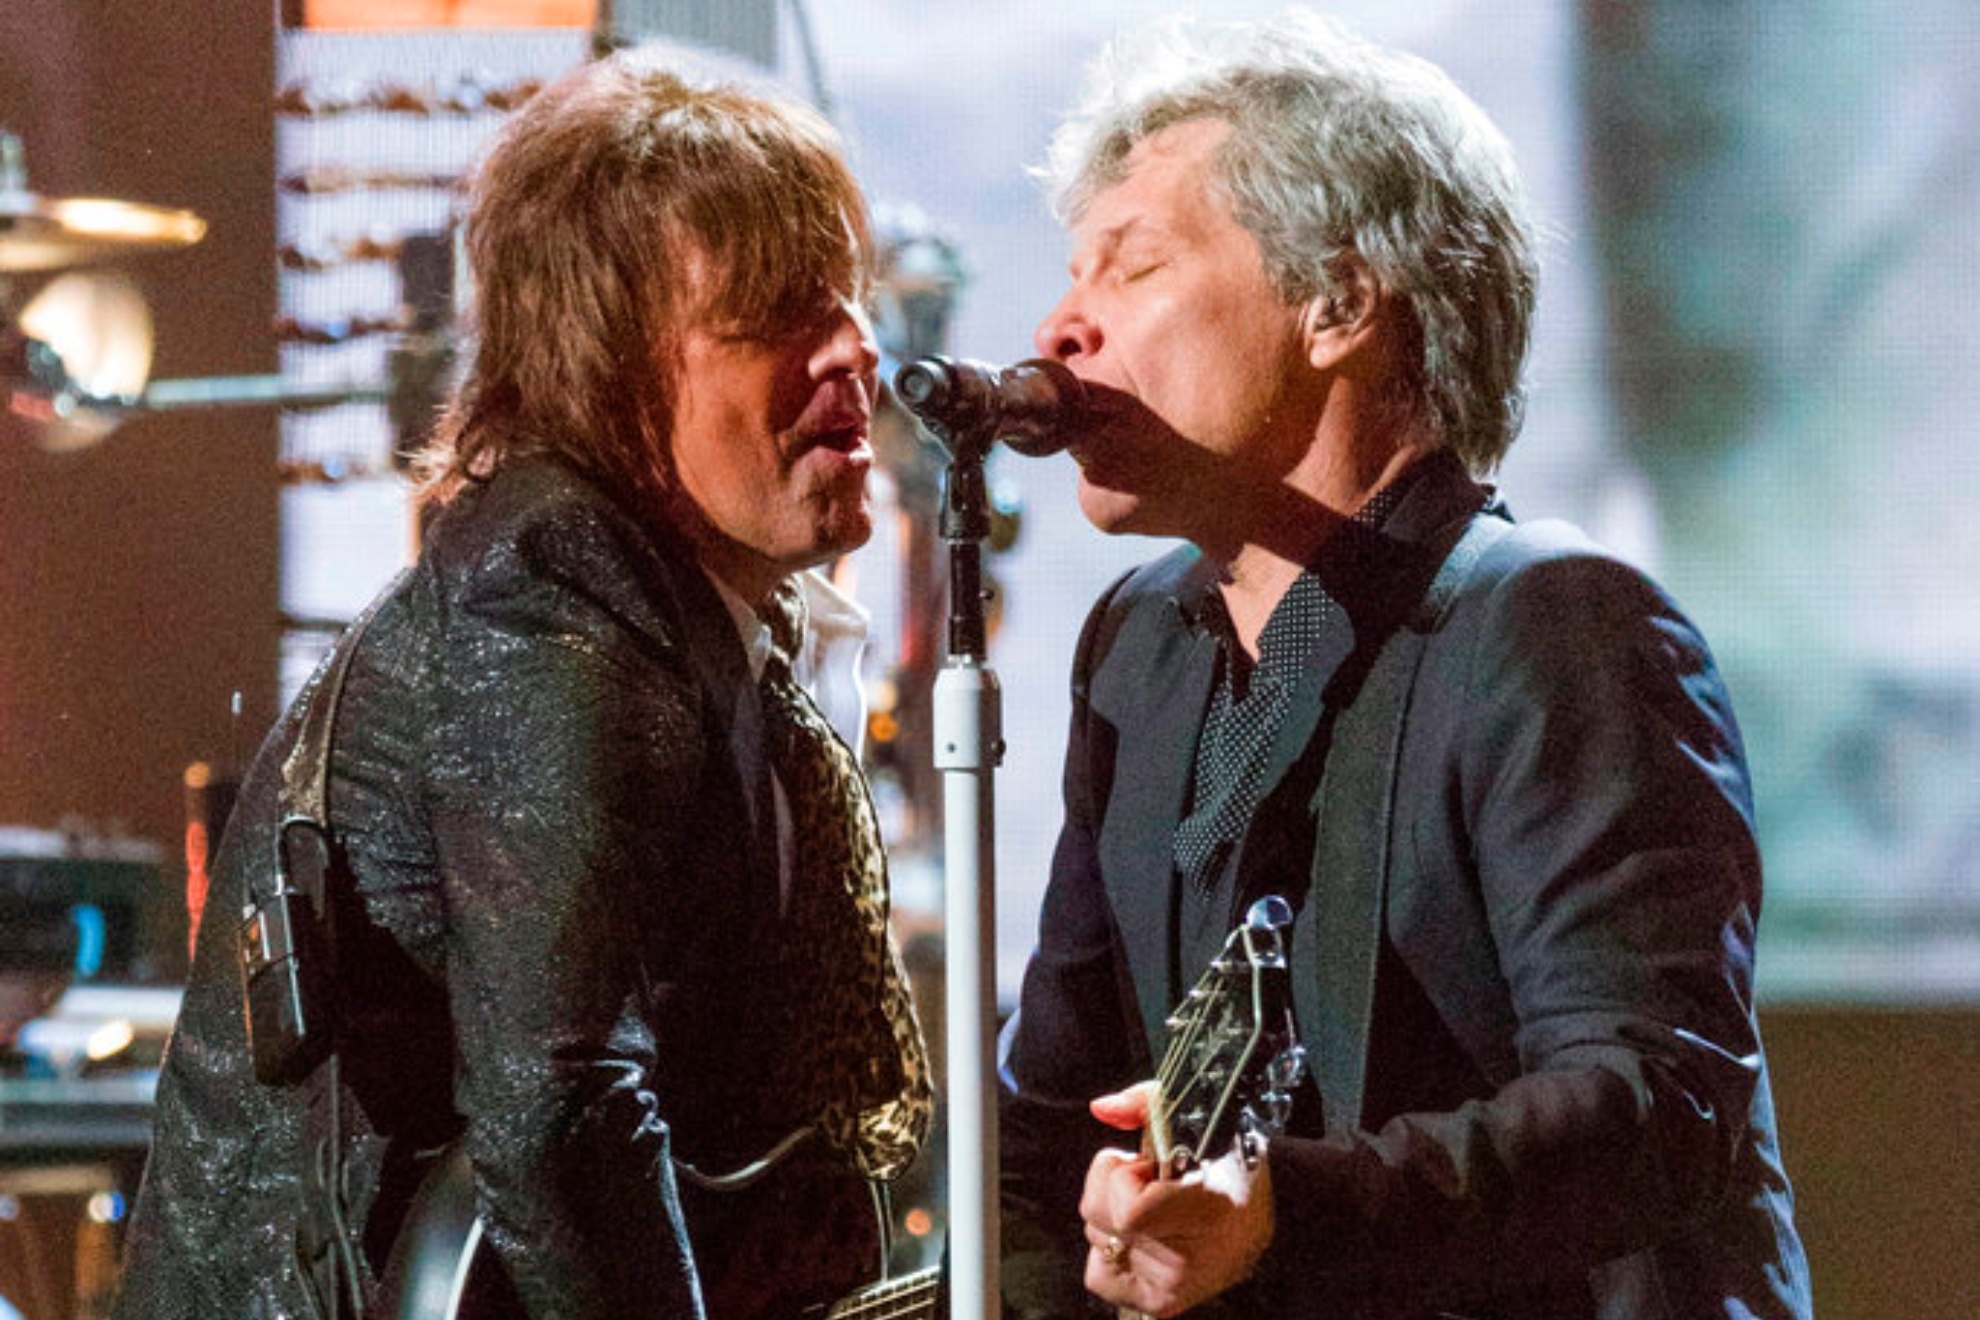 Jon Bon Jovi, Richie Sambora put aside differences 11-year riff while watching band docuseries together